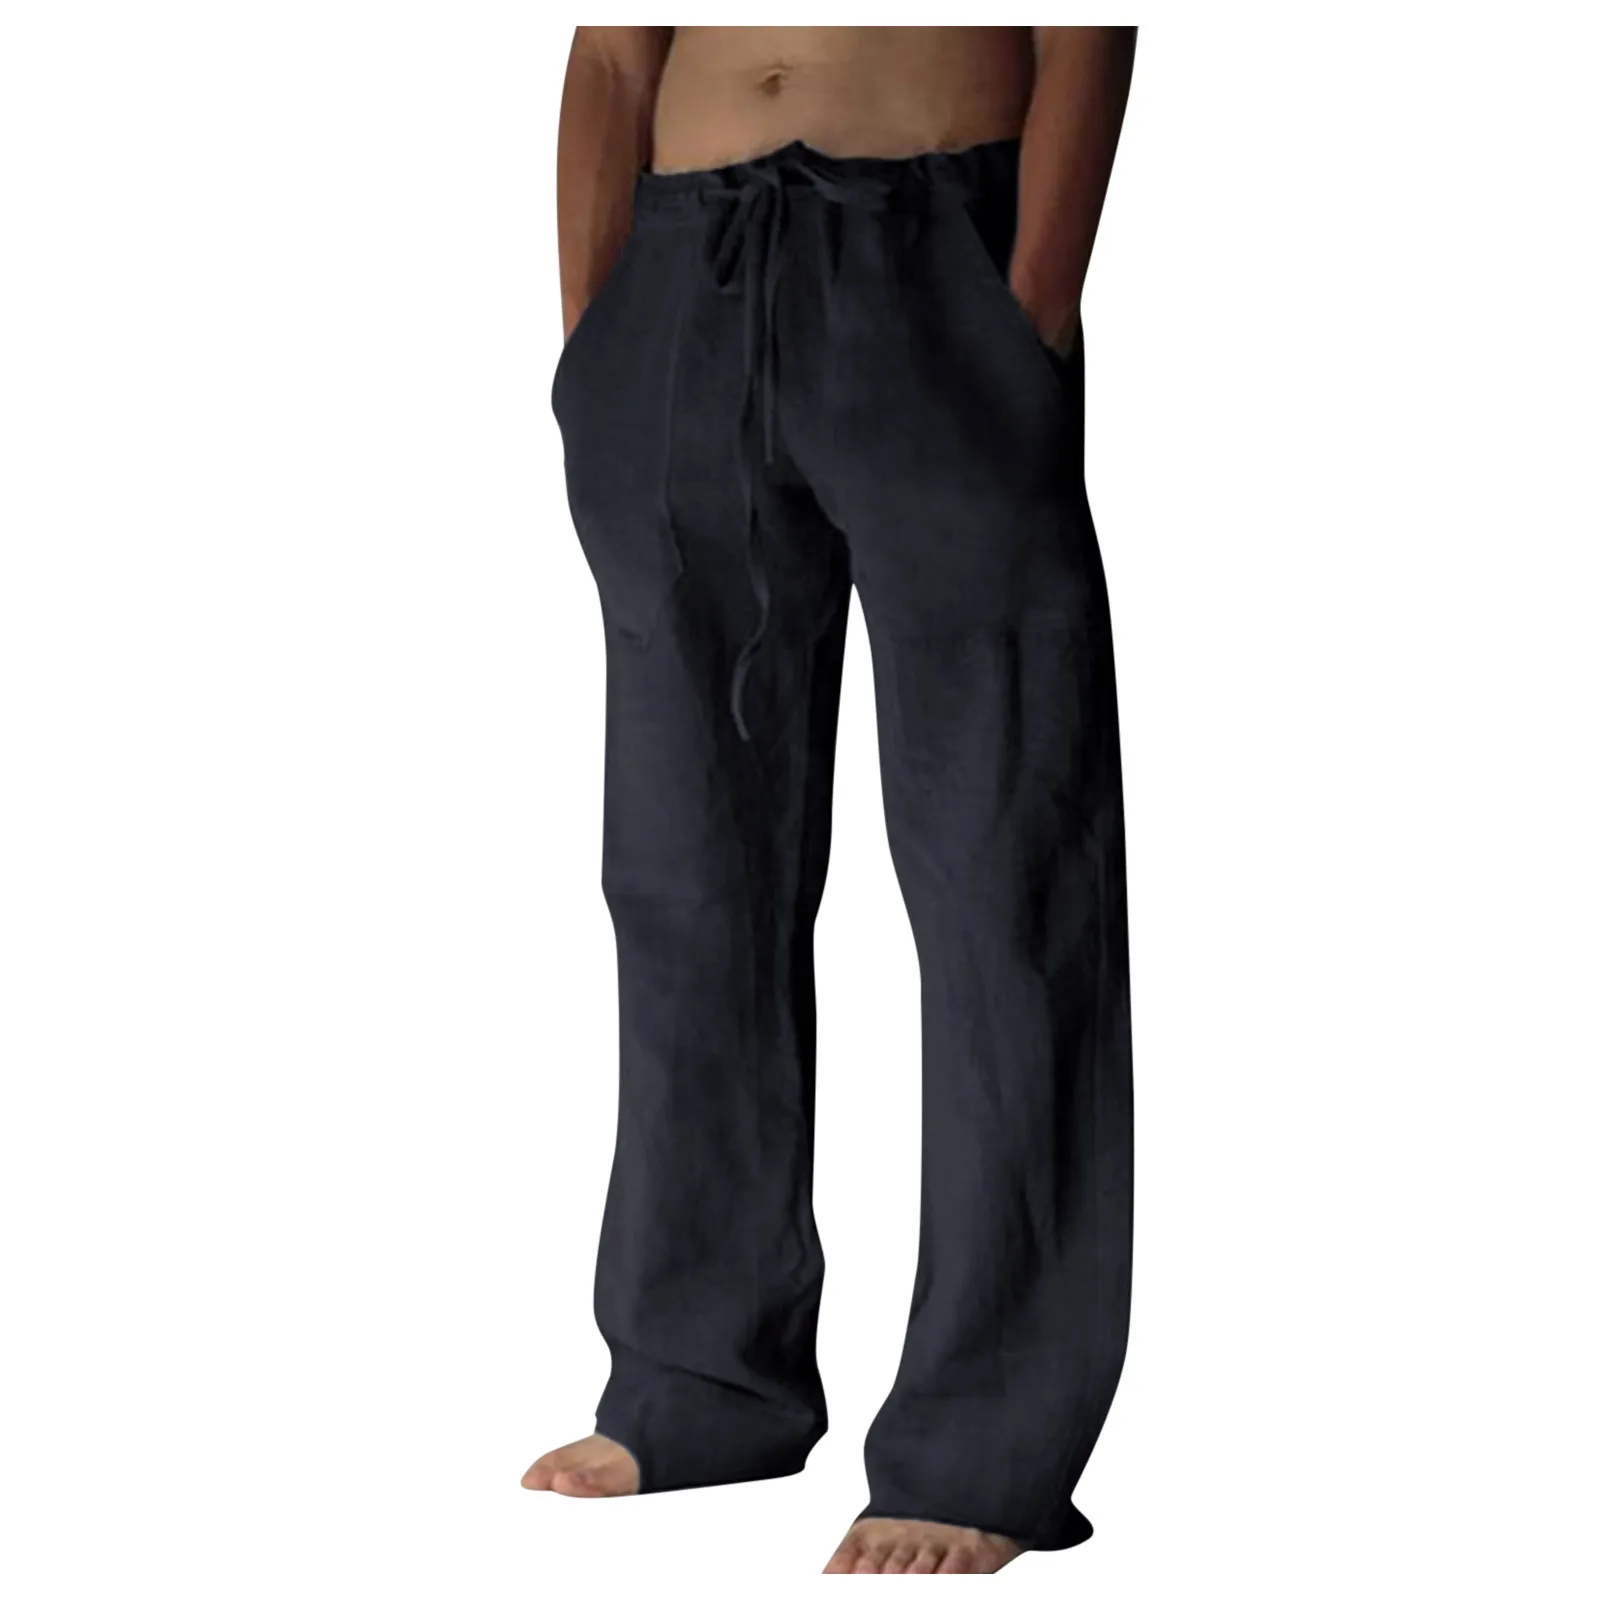 plus size khaki pants Men's casual everyday solid full length mid-waist pocket drawstring pants stylish high quality comfortable pants business casual pants men